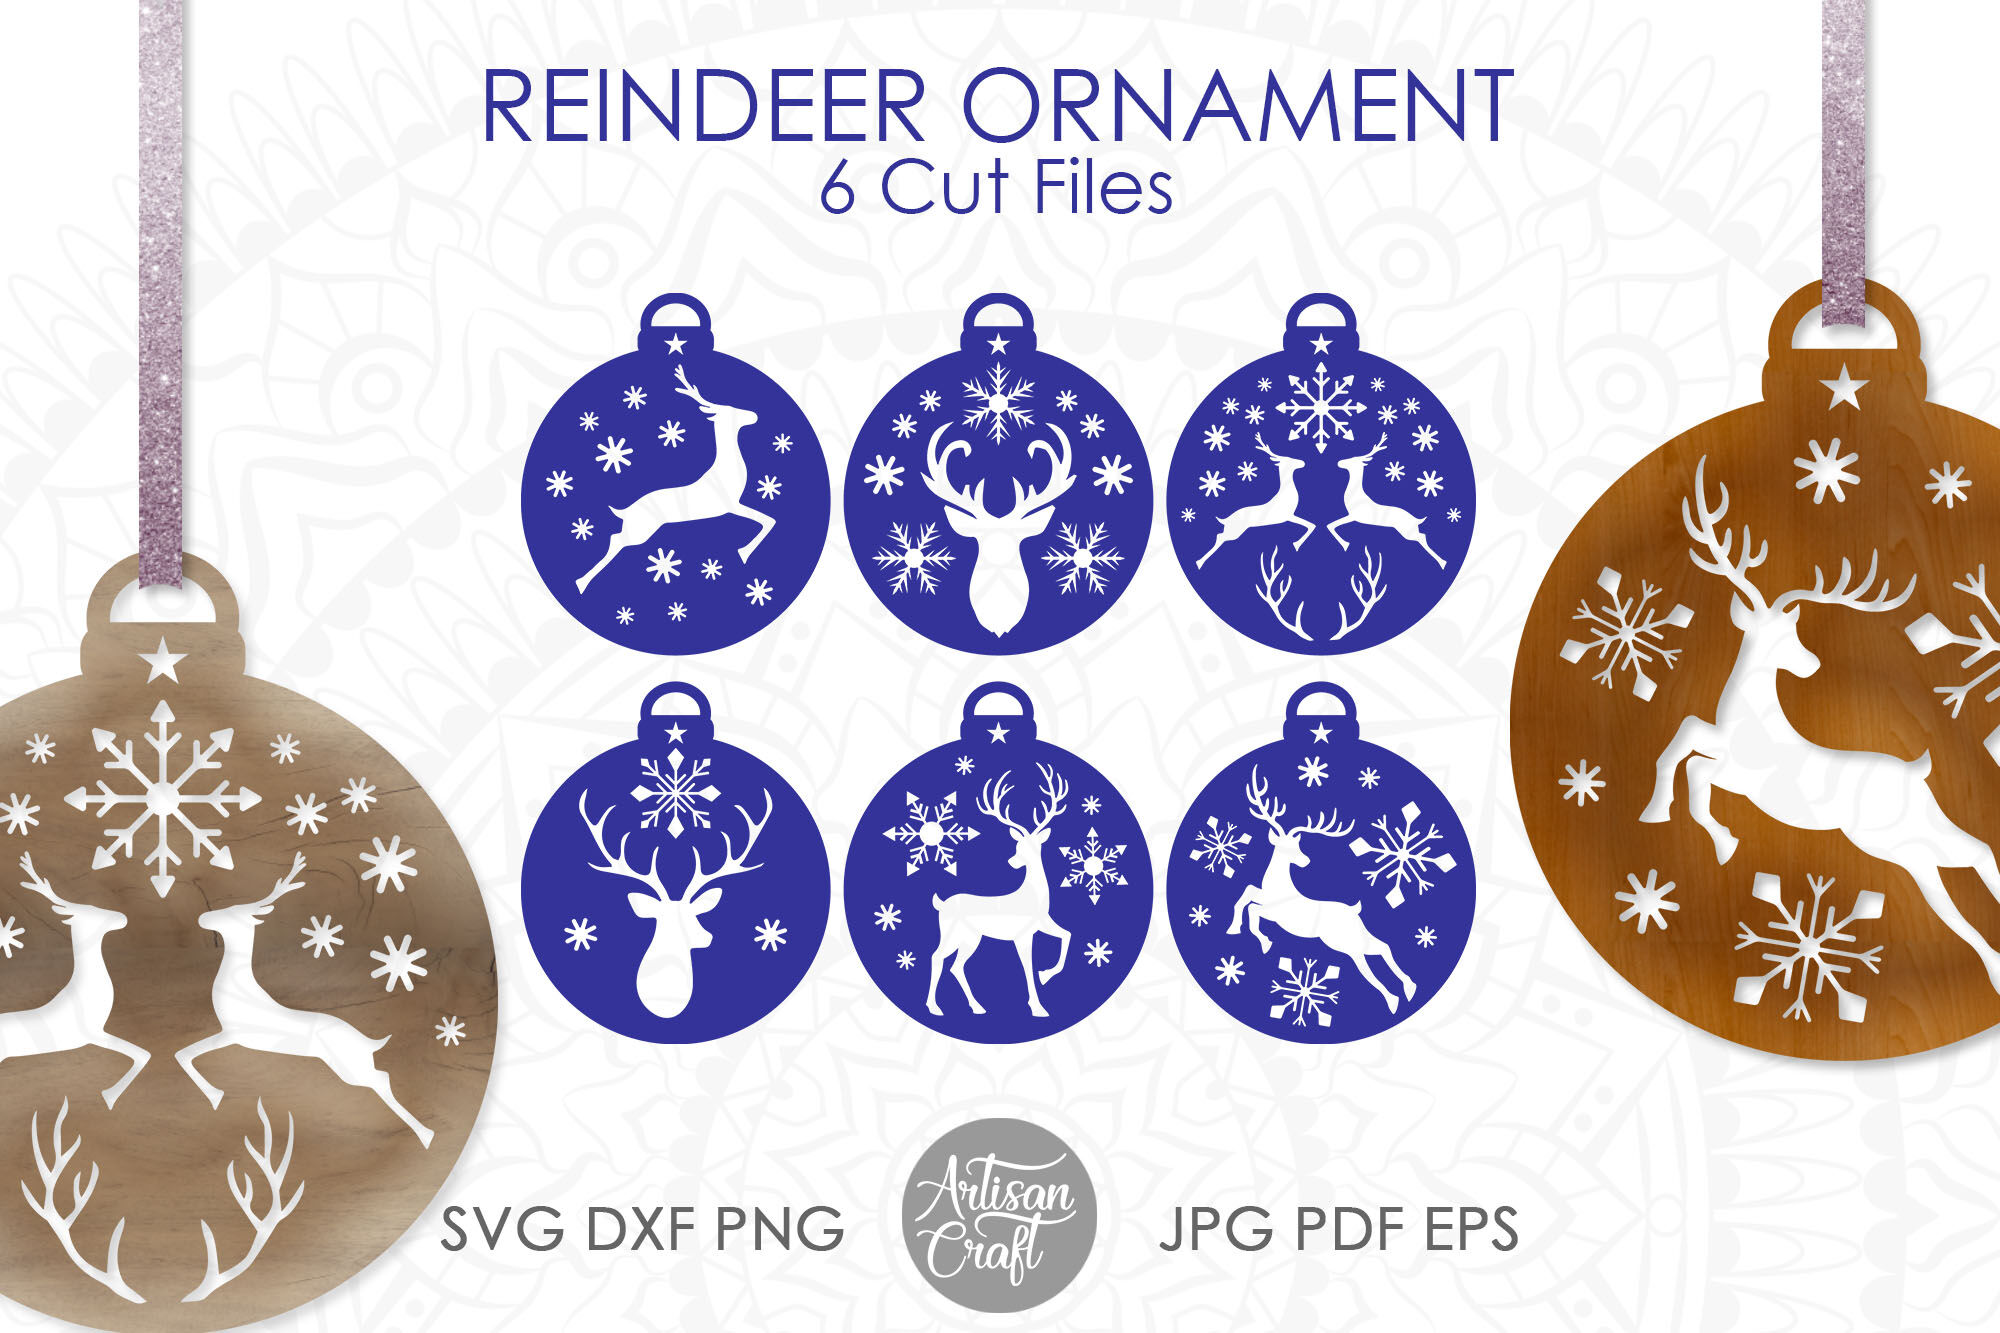 Reindeer ornament, SVG, Christmas ornaments SVG By Artisan Craft SVG